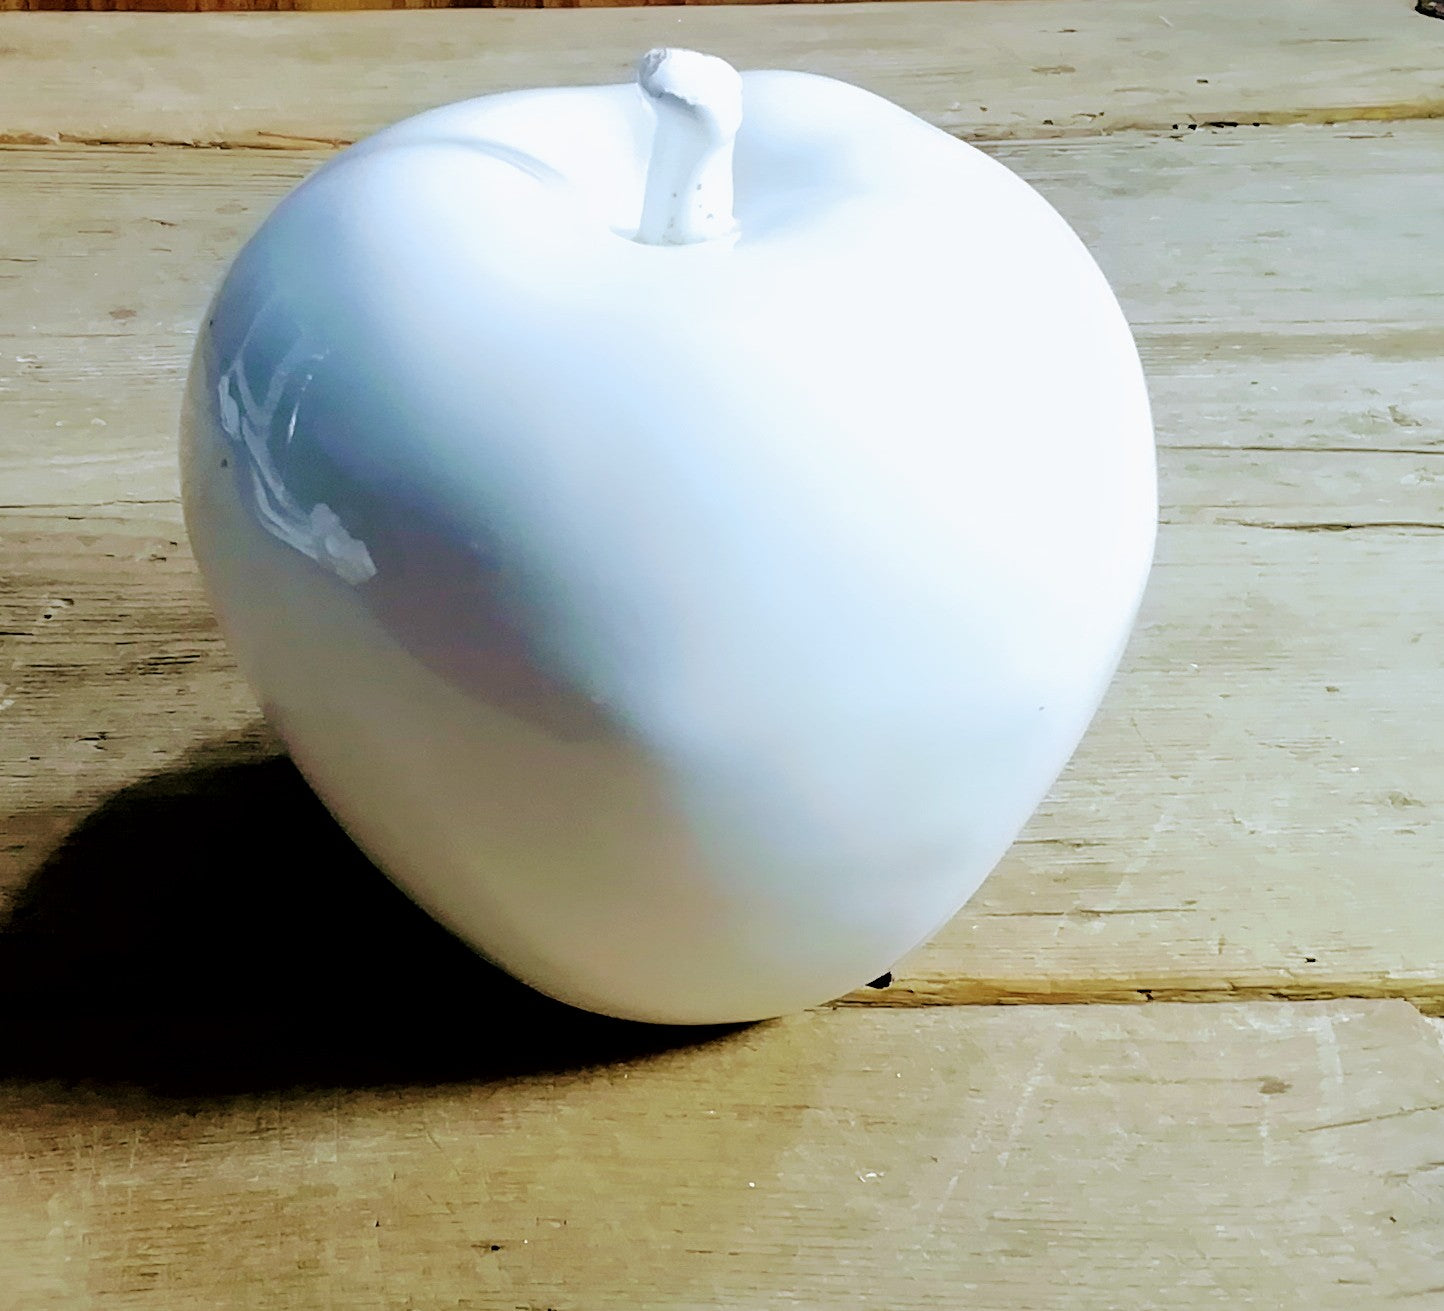 Manzana esmalte blanco. Pieza decorativa. Medida aprox 16cm